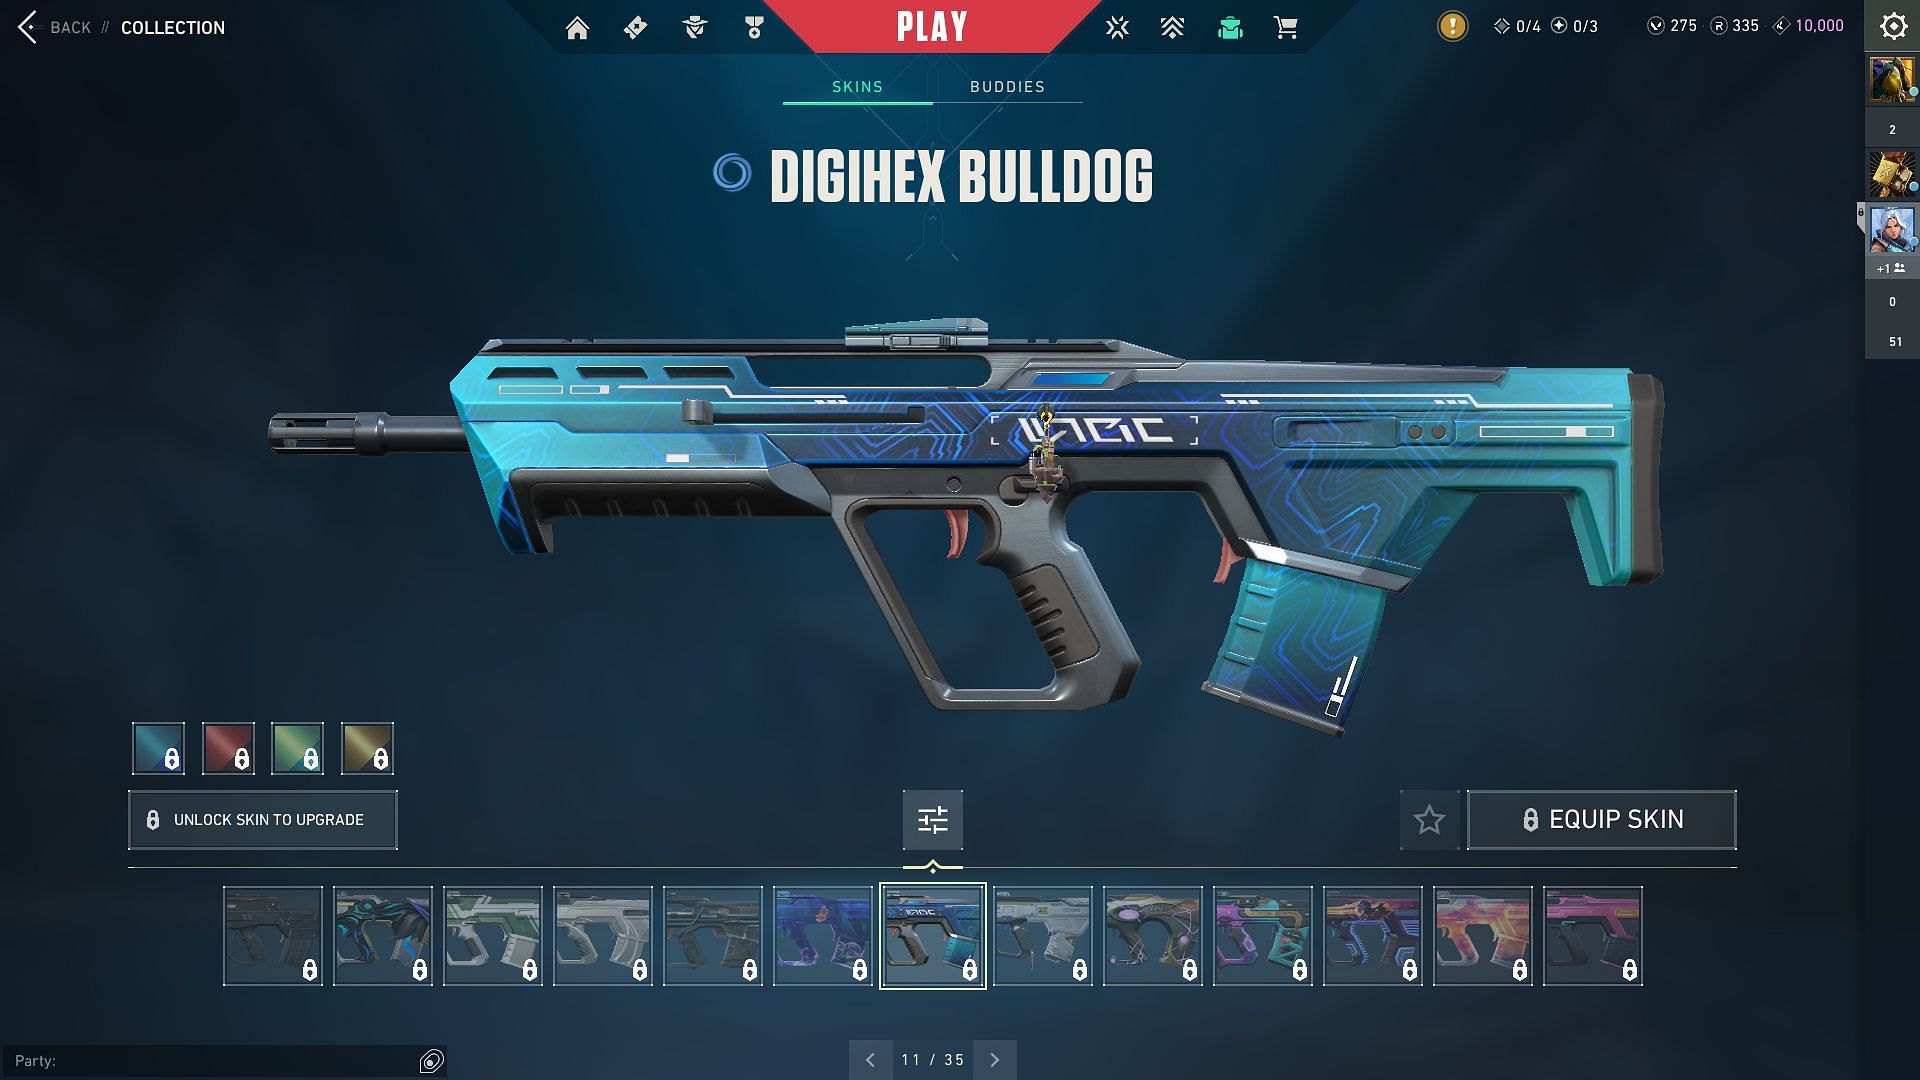 Digihex Bulldog (Image via Sportskeeda and Riot Games)